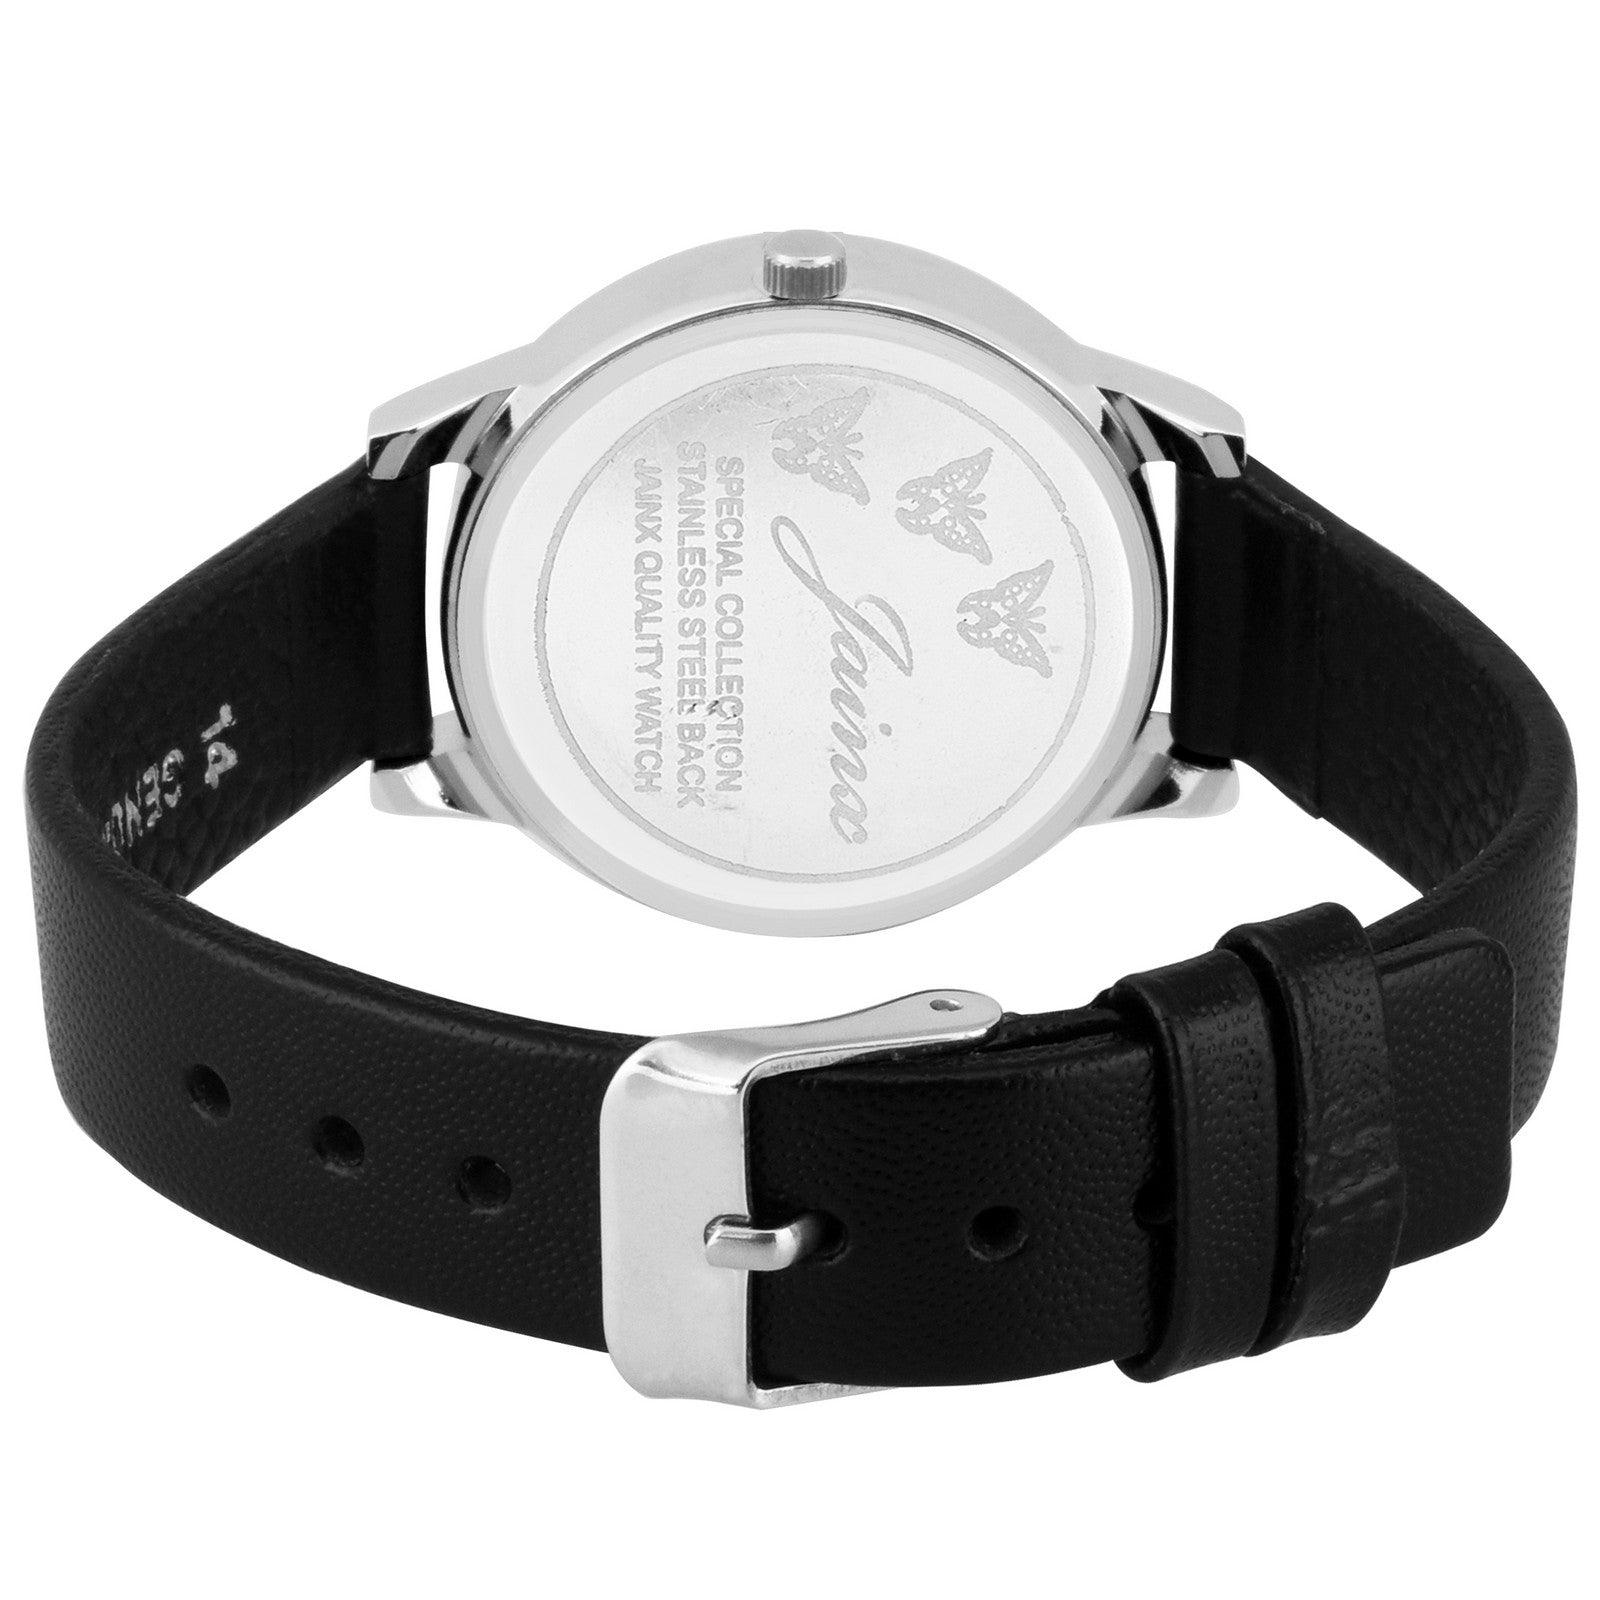 Jainx JW602 Black Day & Date Function Genuine Leather Strap Analog Watch - For Women - Nice Deal Enterprises Pvt. Ltd.